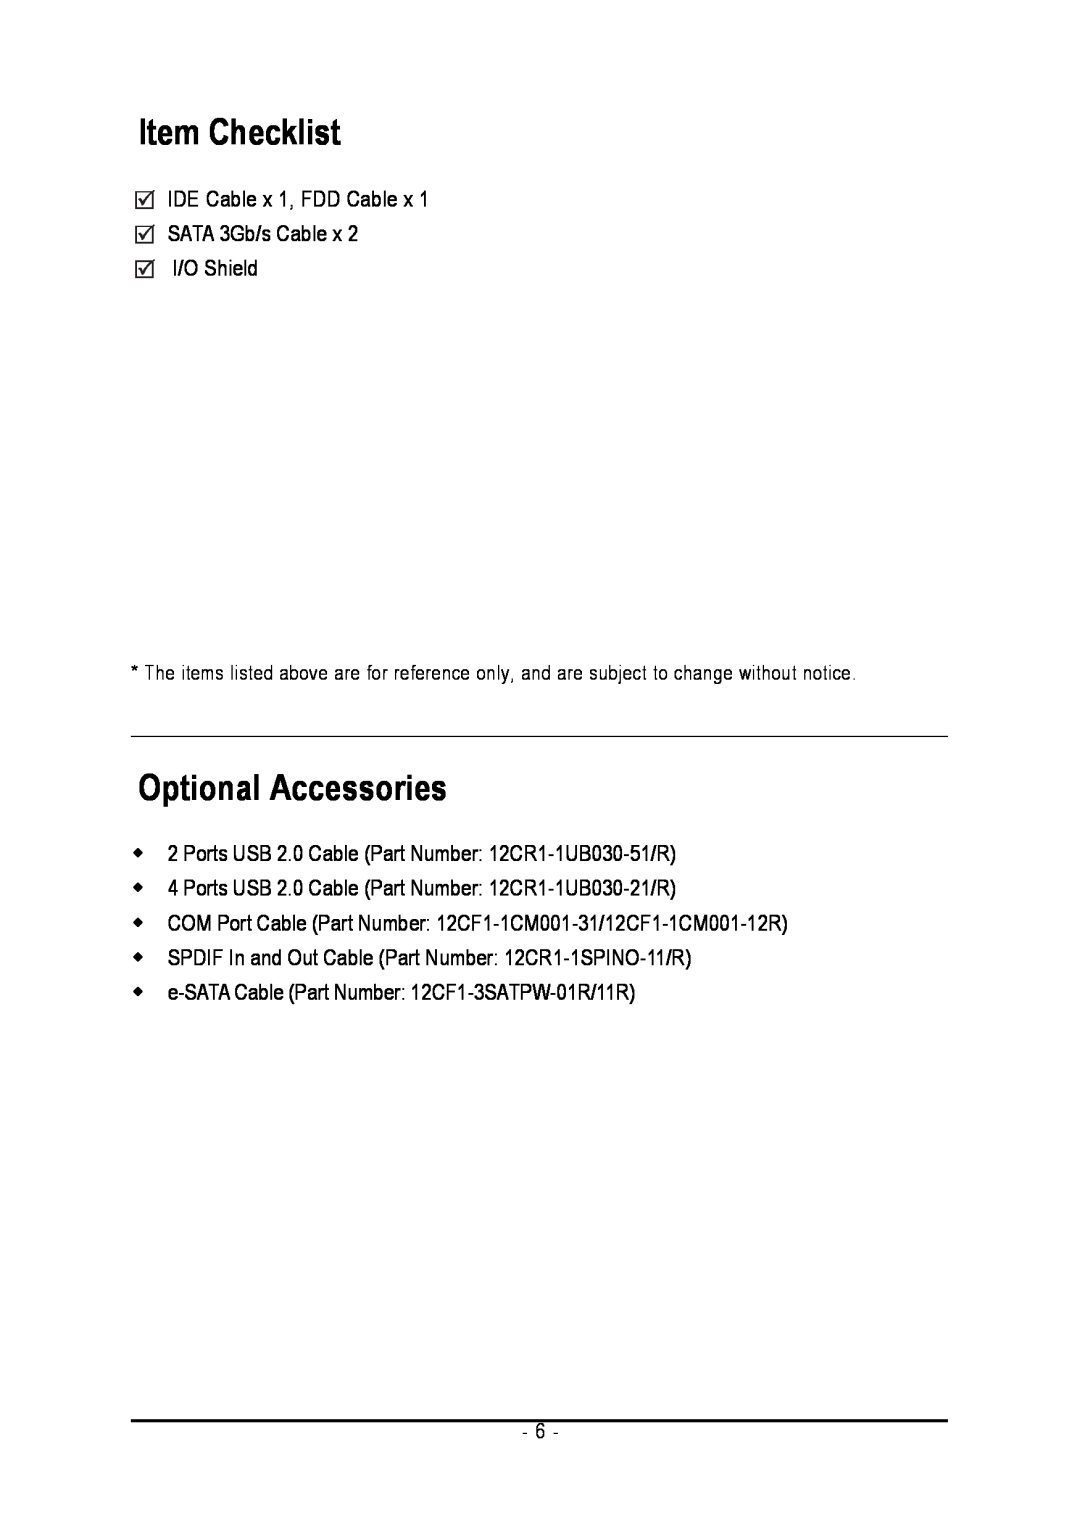 Gigabyte GA-965GM-DS2, GA-965GM-S2 user manual Item Checklist, Optional Accessories 